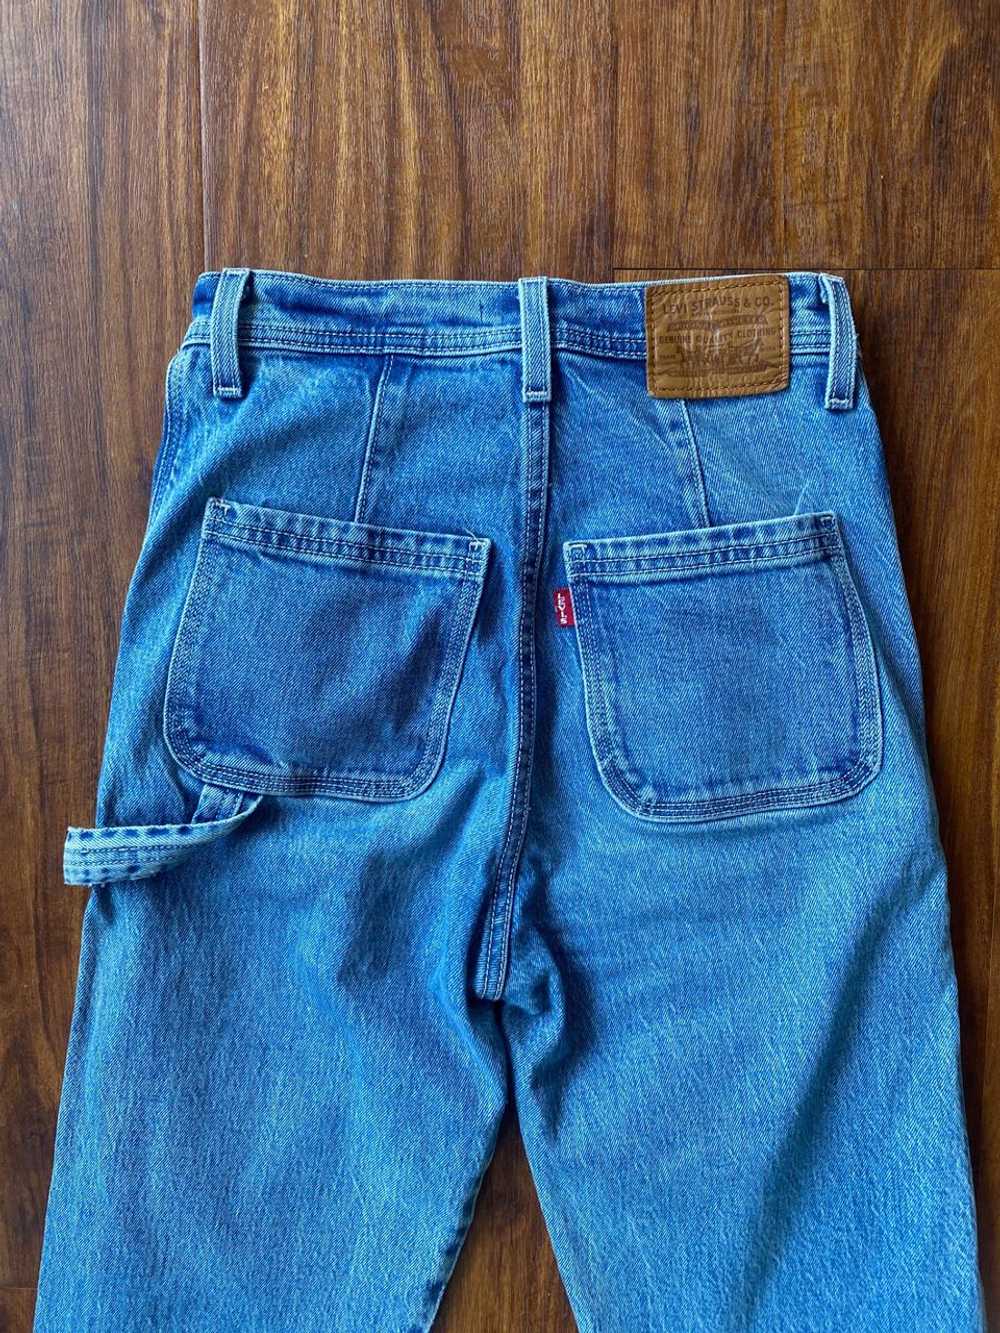 LEVI'S Ribcage straight carpenter jeans (24") |… - image 5